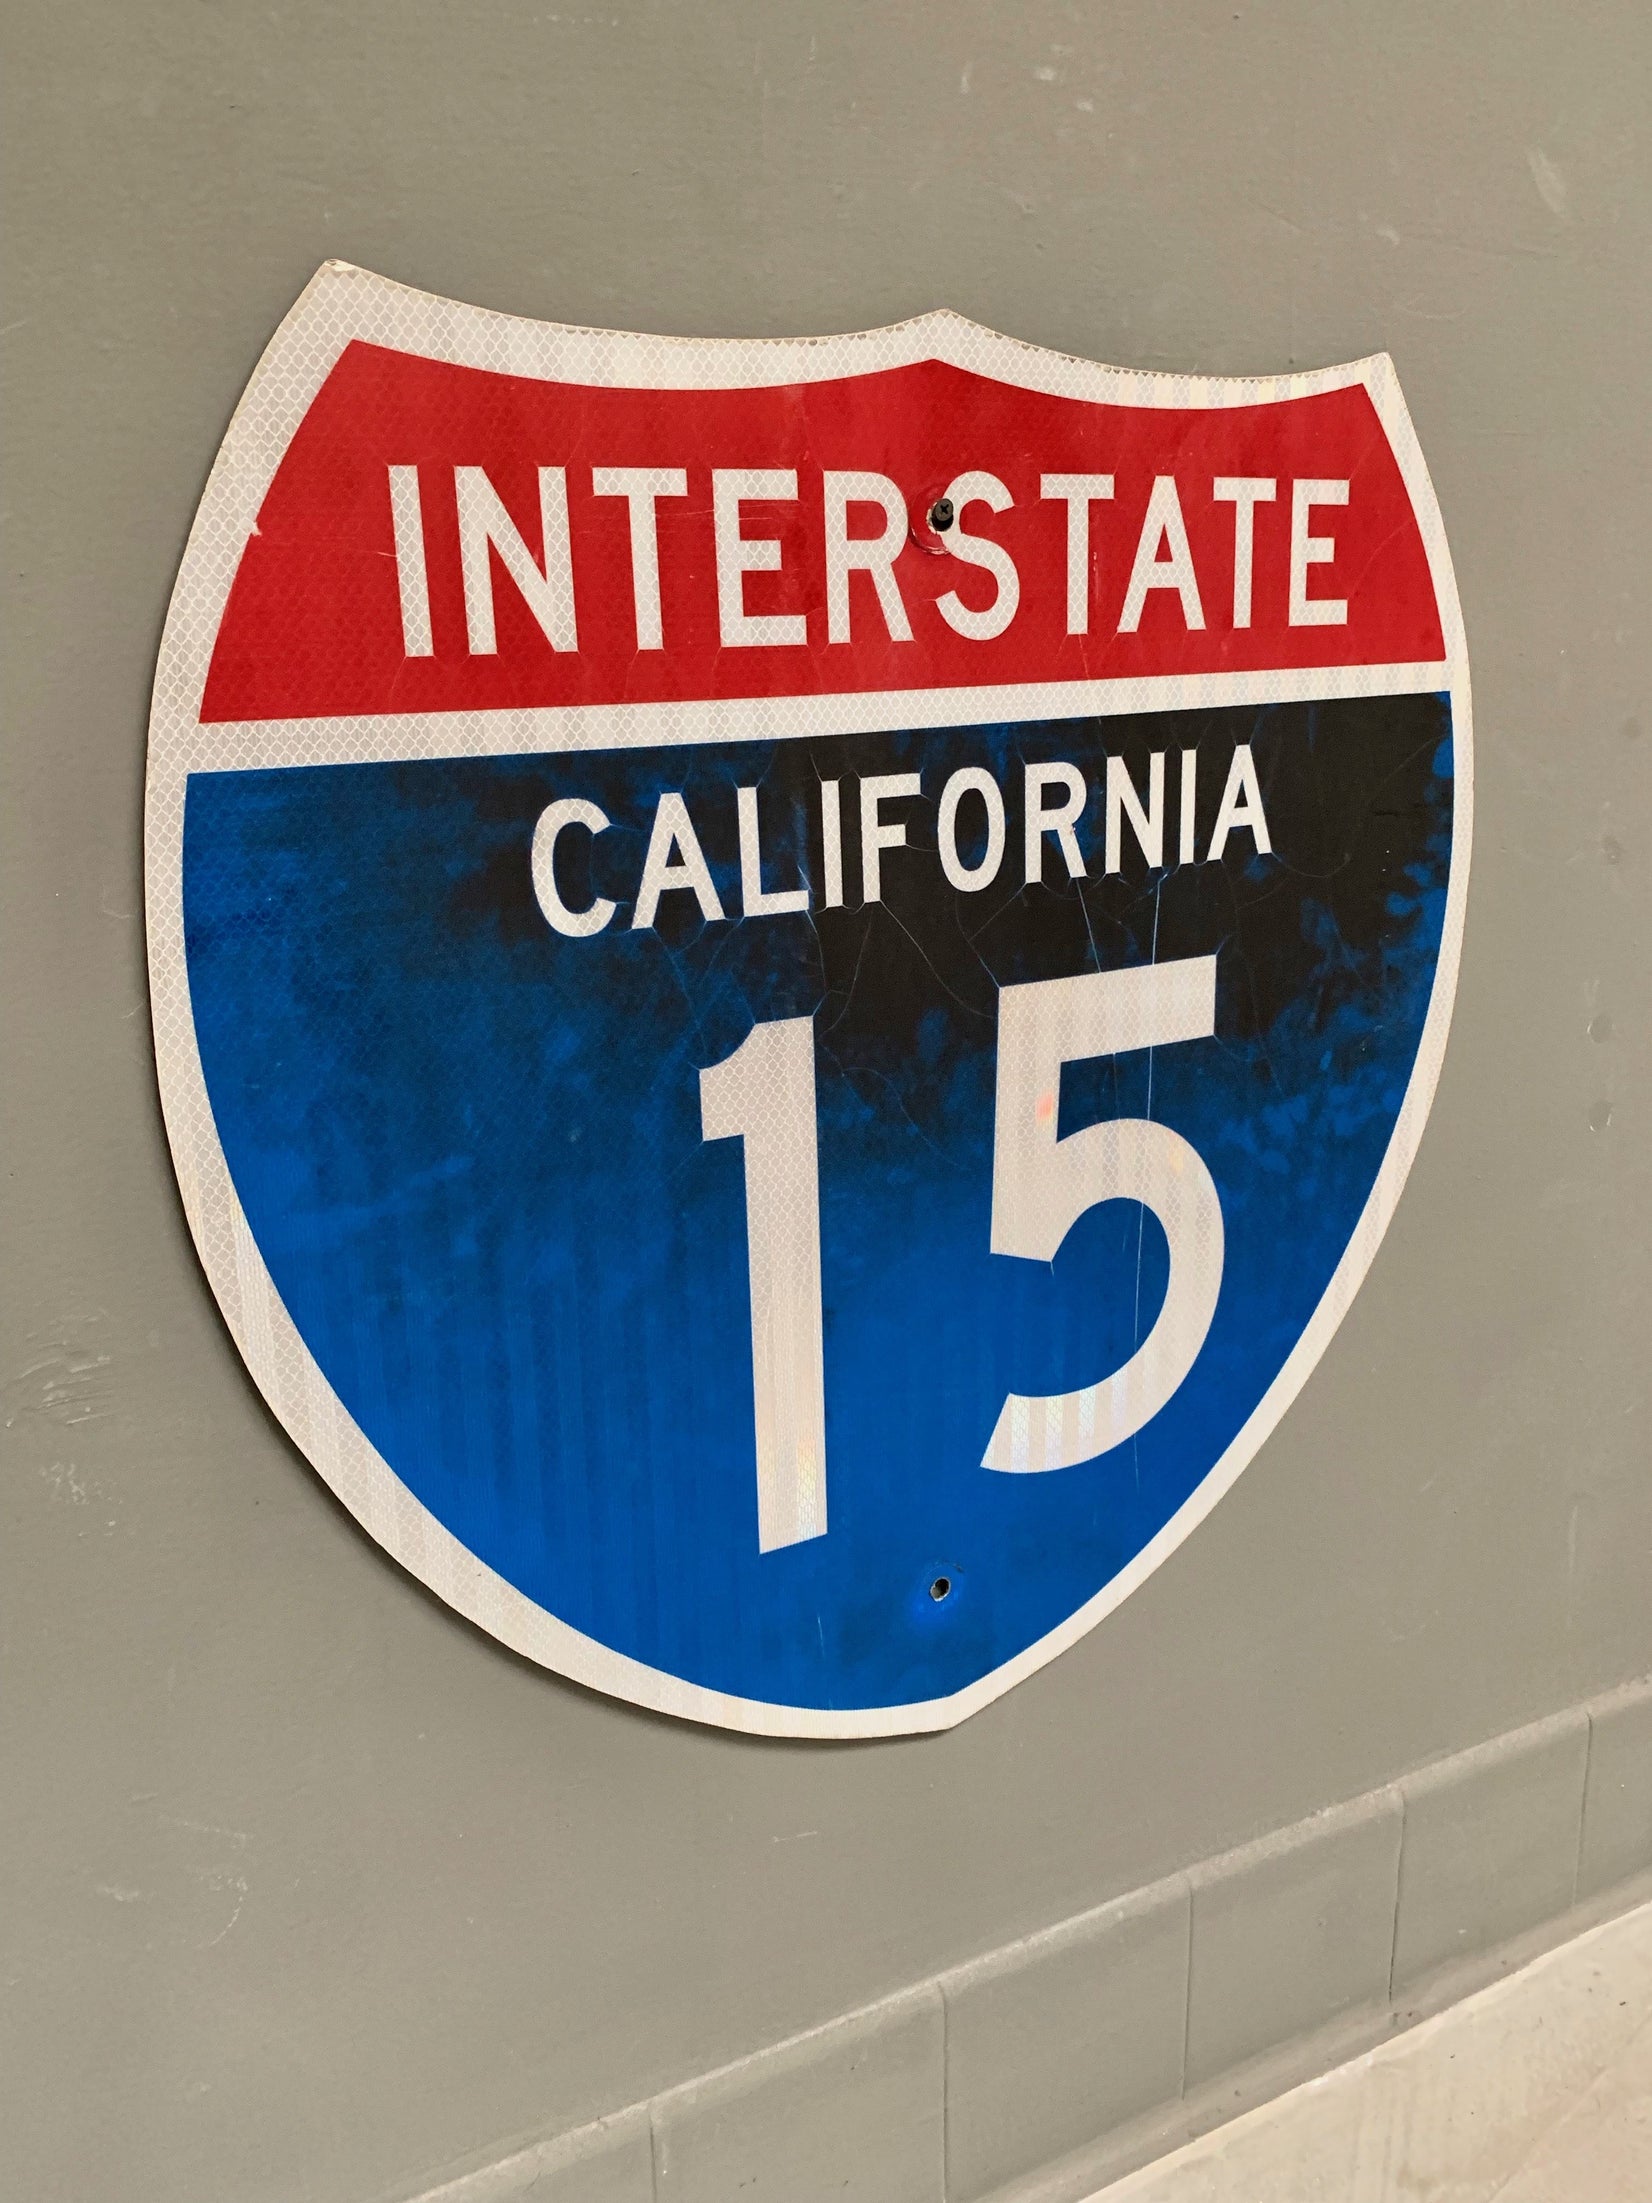 California Interstate 15 Freeway Sign